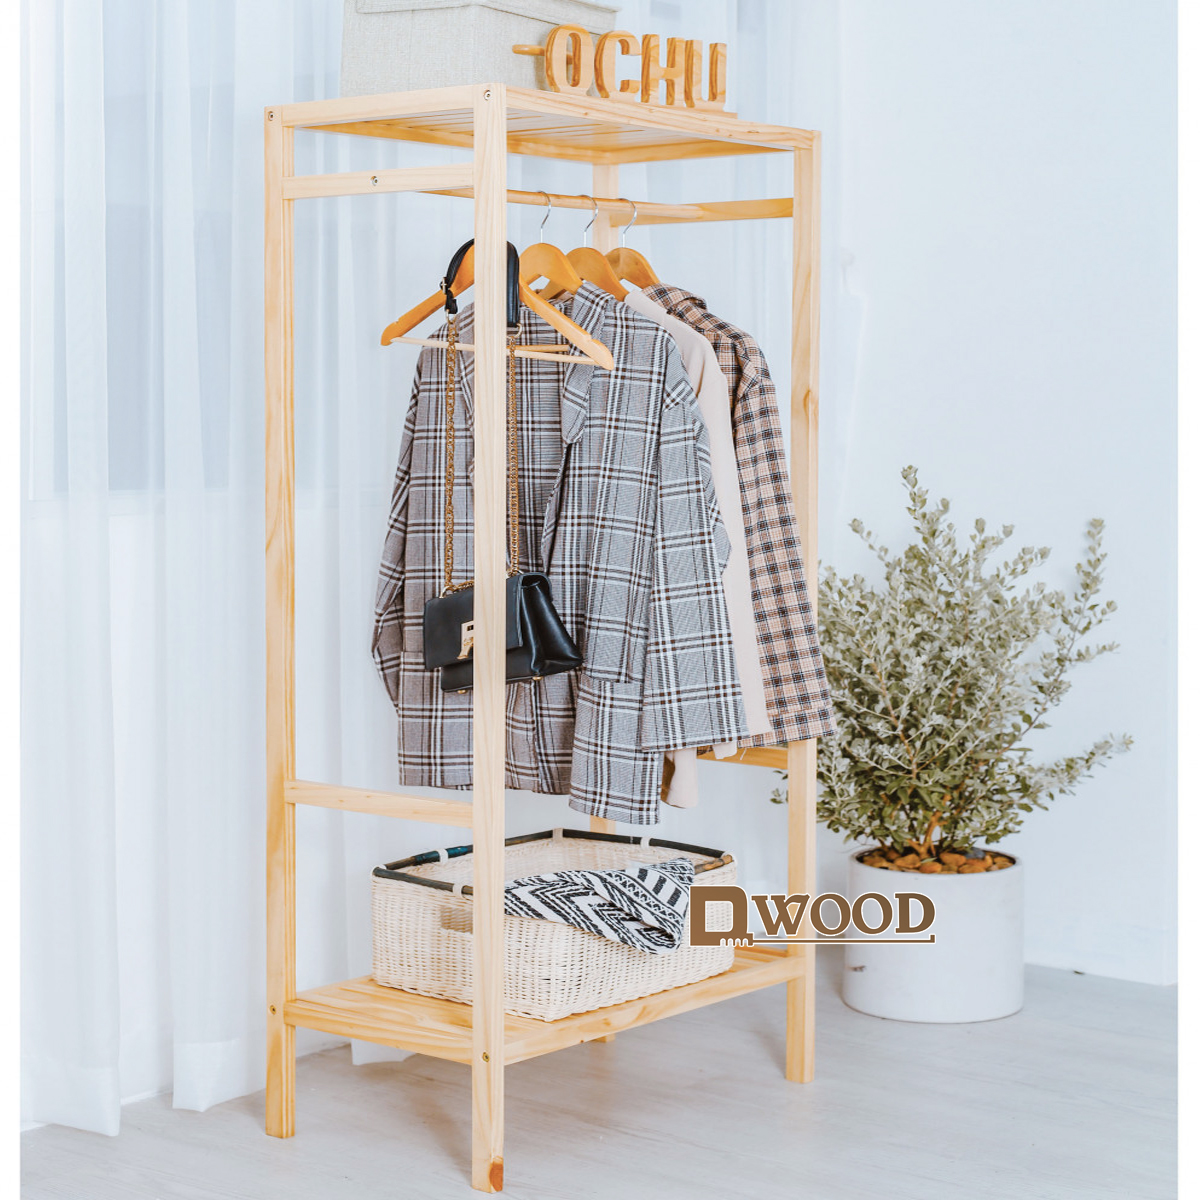 Garment Racks Pine Wood DWOOD For Hanging Clothes